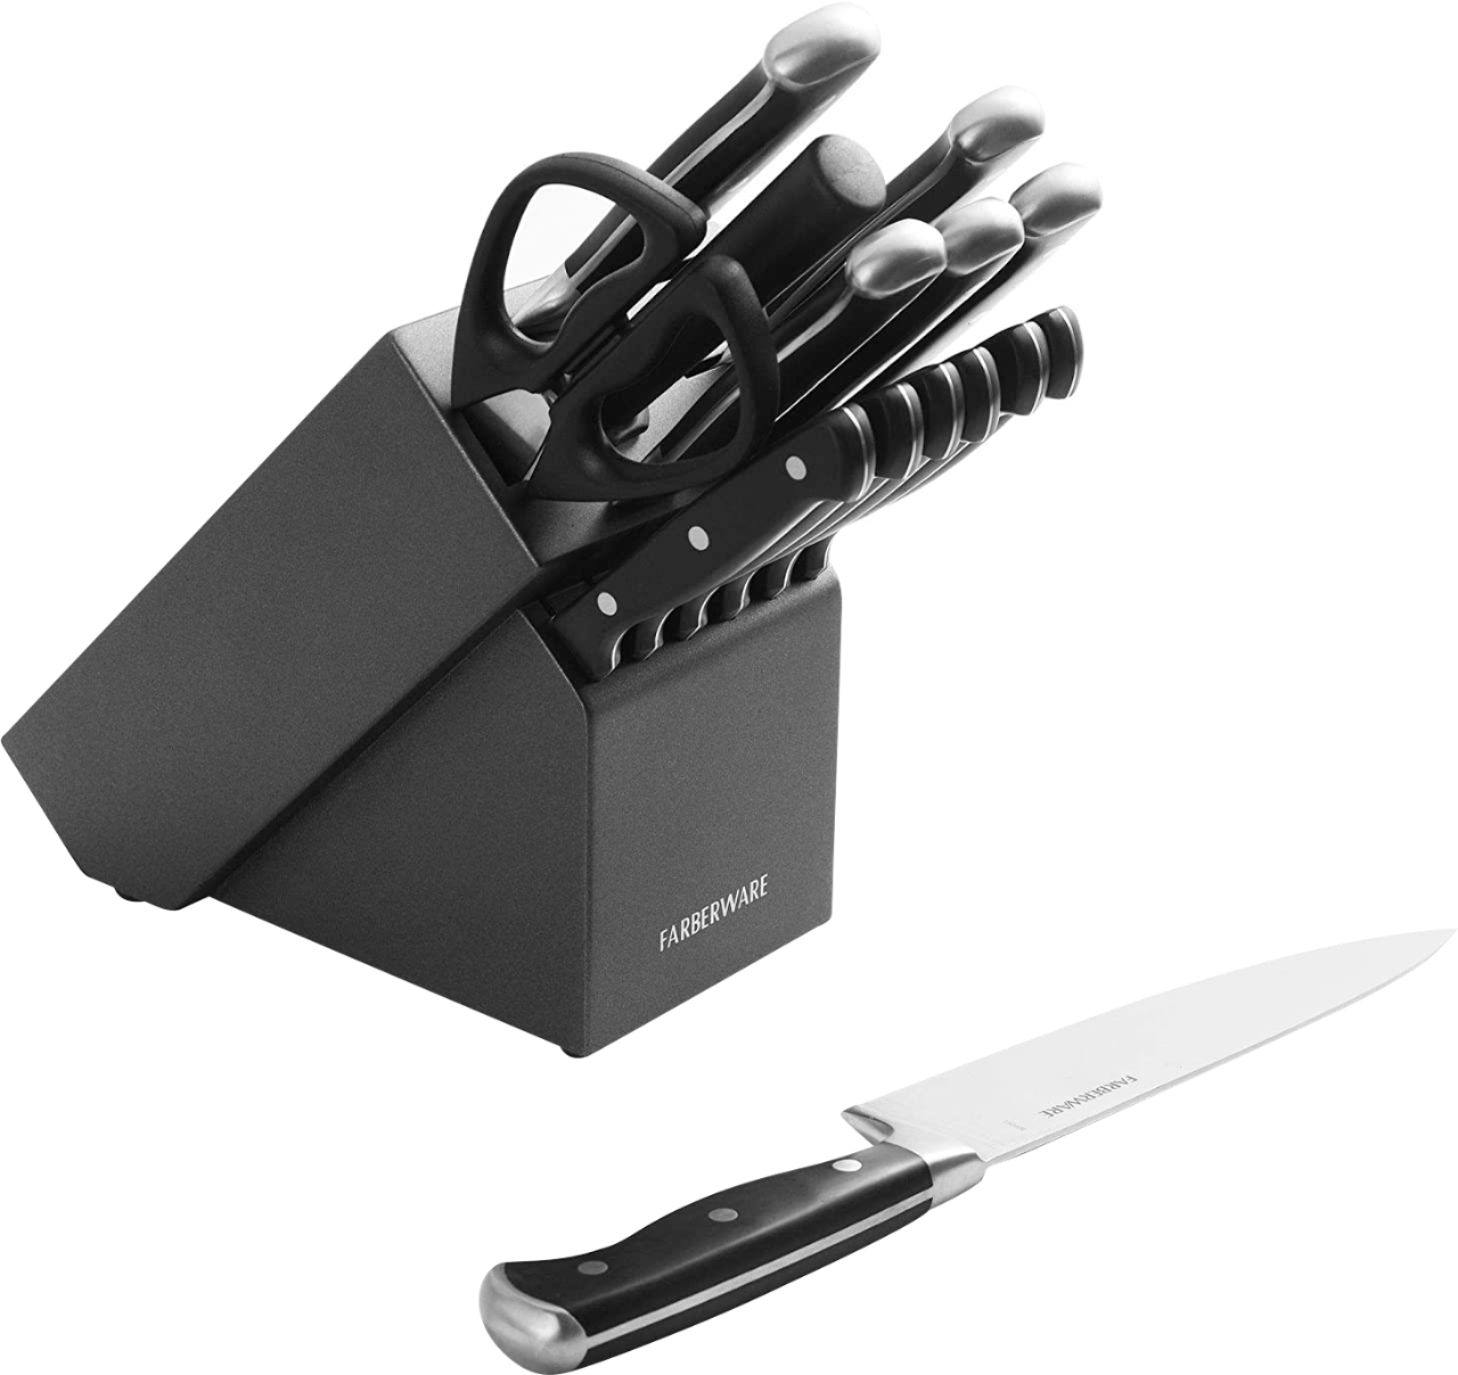 Farberware Triple-Riveted Chef Knife Set, 3 pc - Kroger